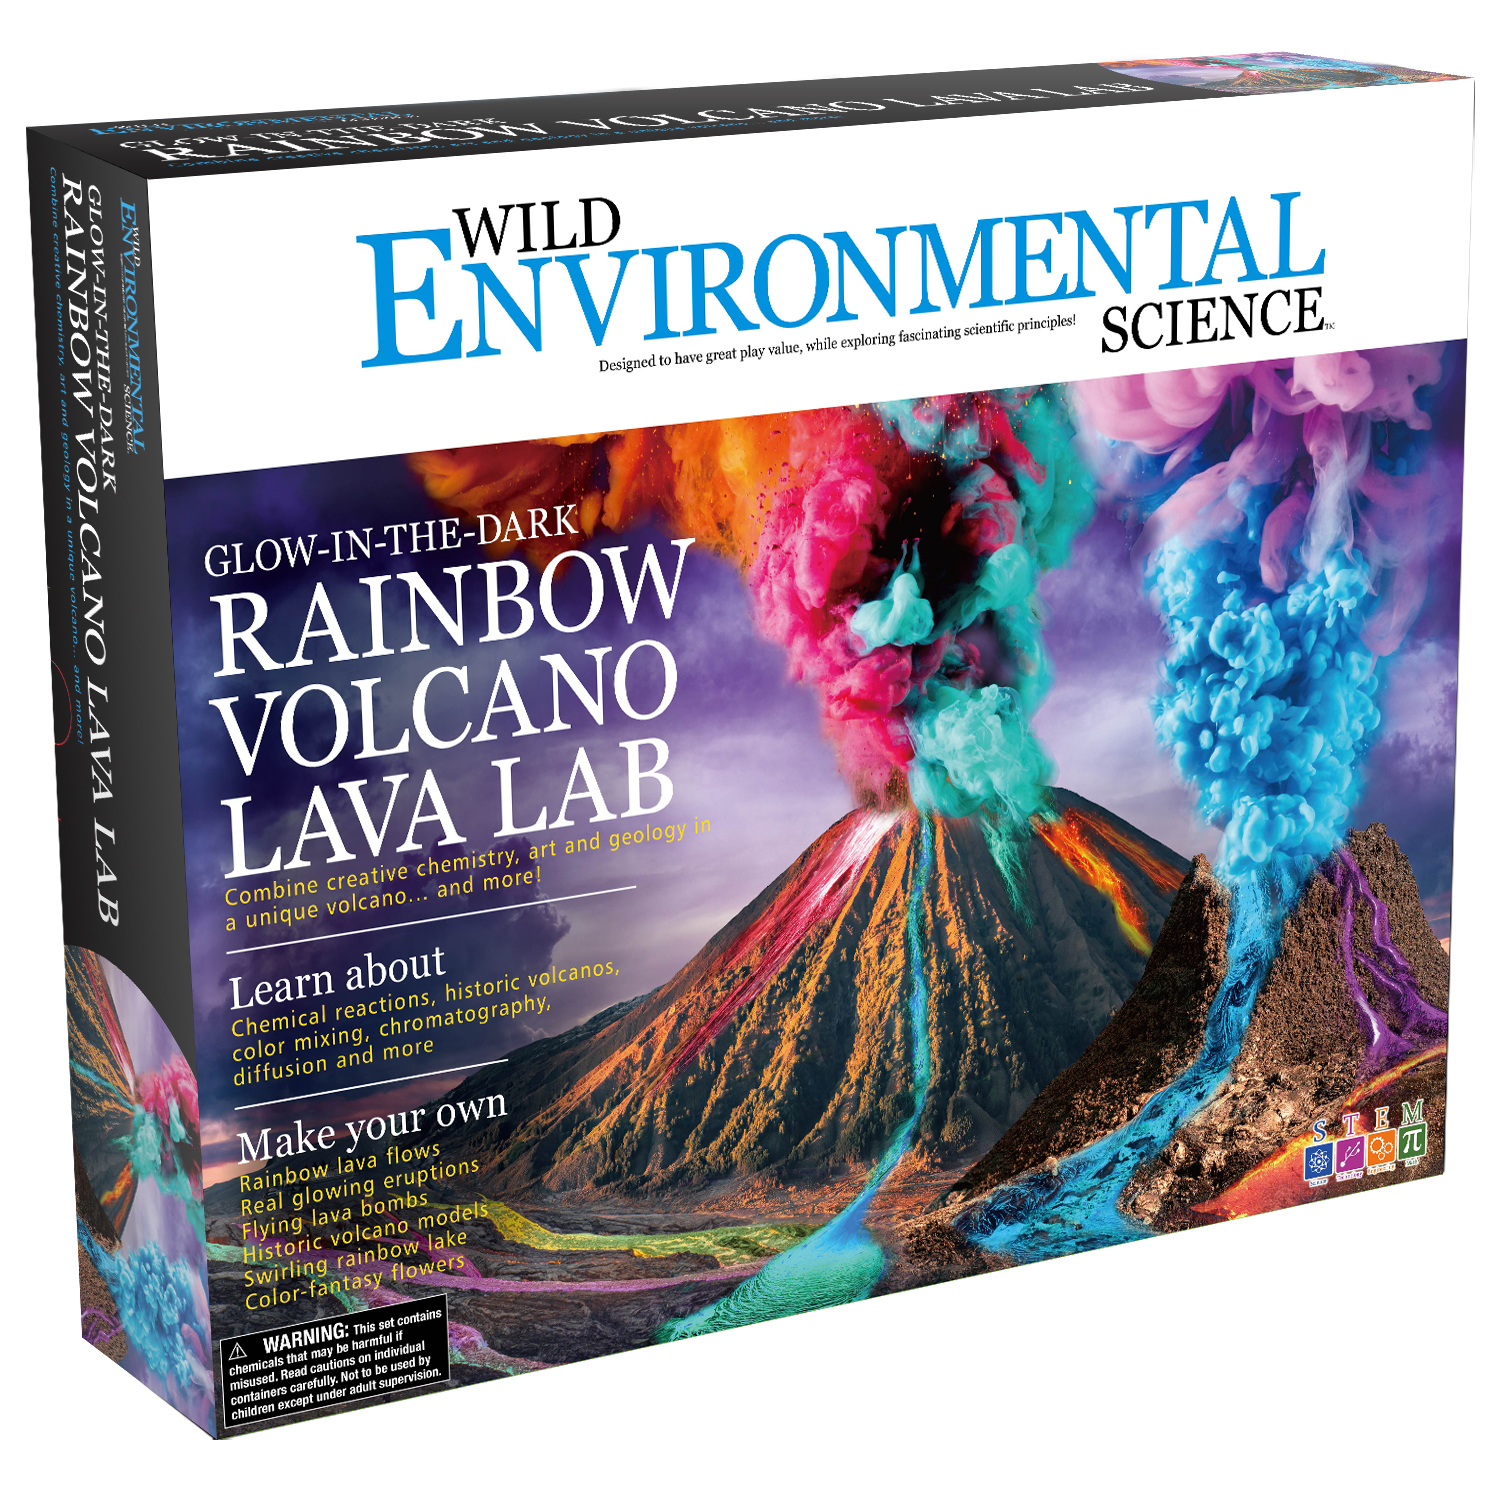 WILD ENVIRONMENTAL SCIENCE Rainbow Volcano Lava Lab